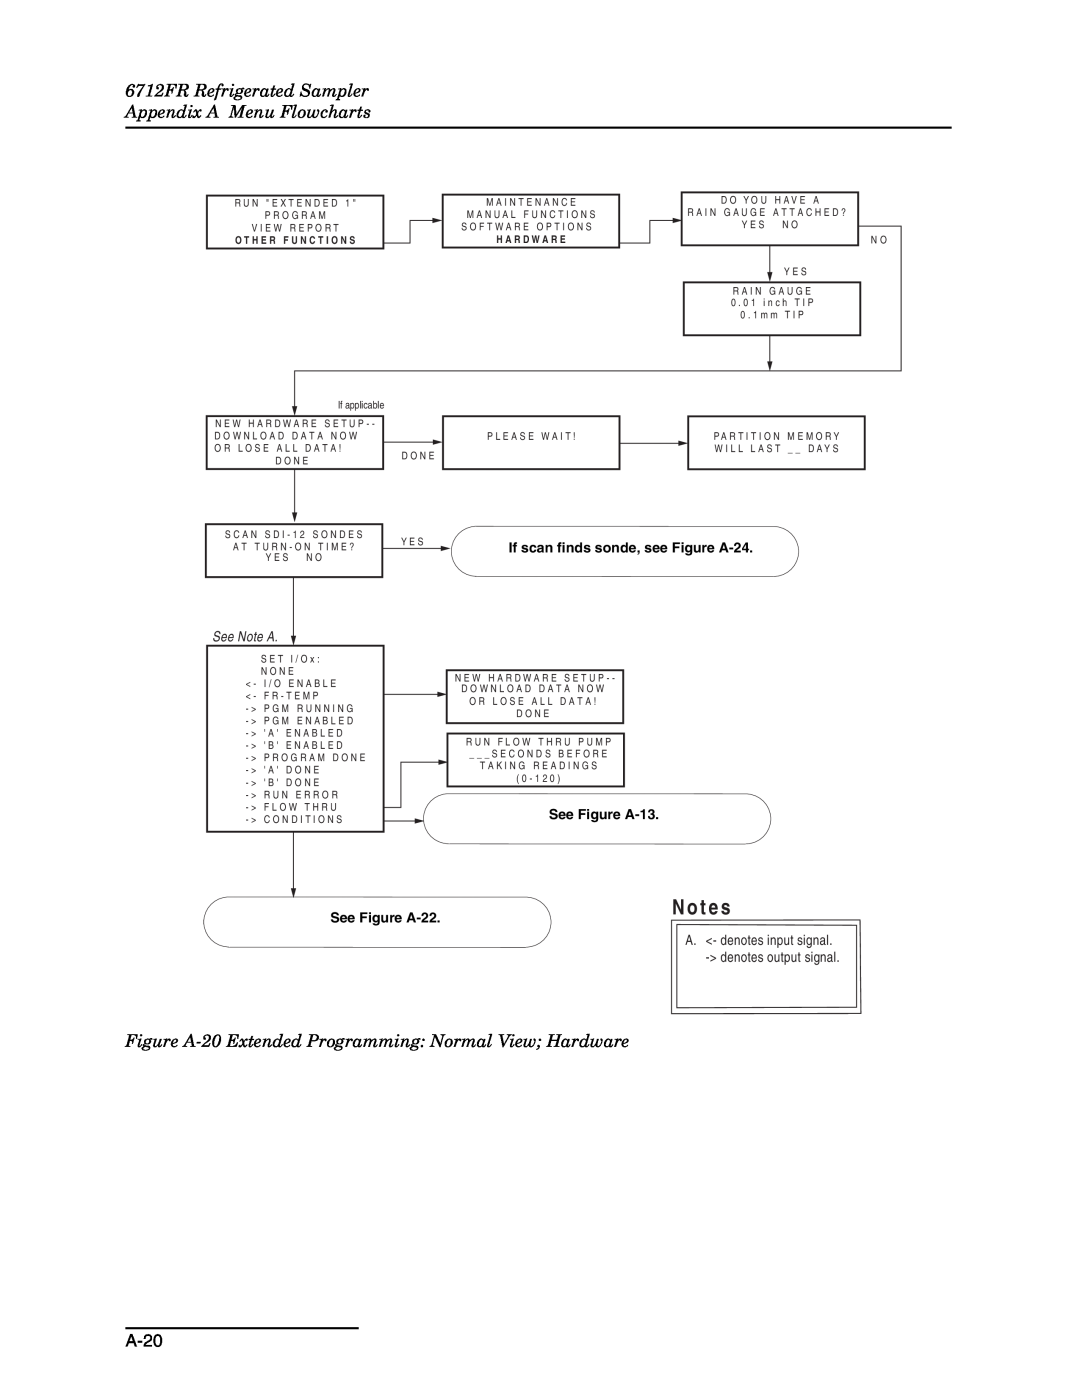 Teledyne manual N o t e s, 6712FR Refrigerated Sampler Appendix A Menu Flowcharts, A-20, See Note A, See Figure A-22 